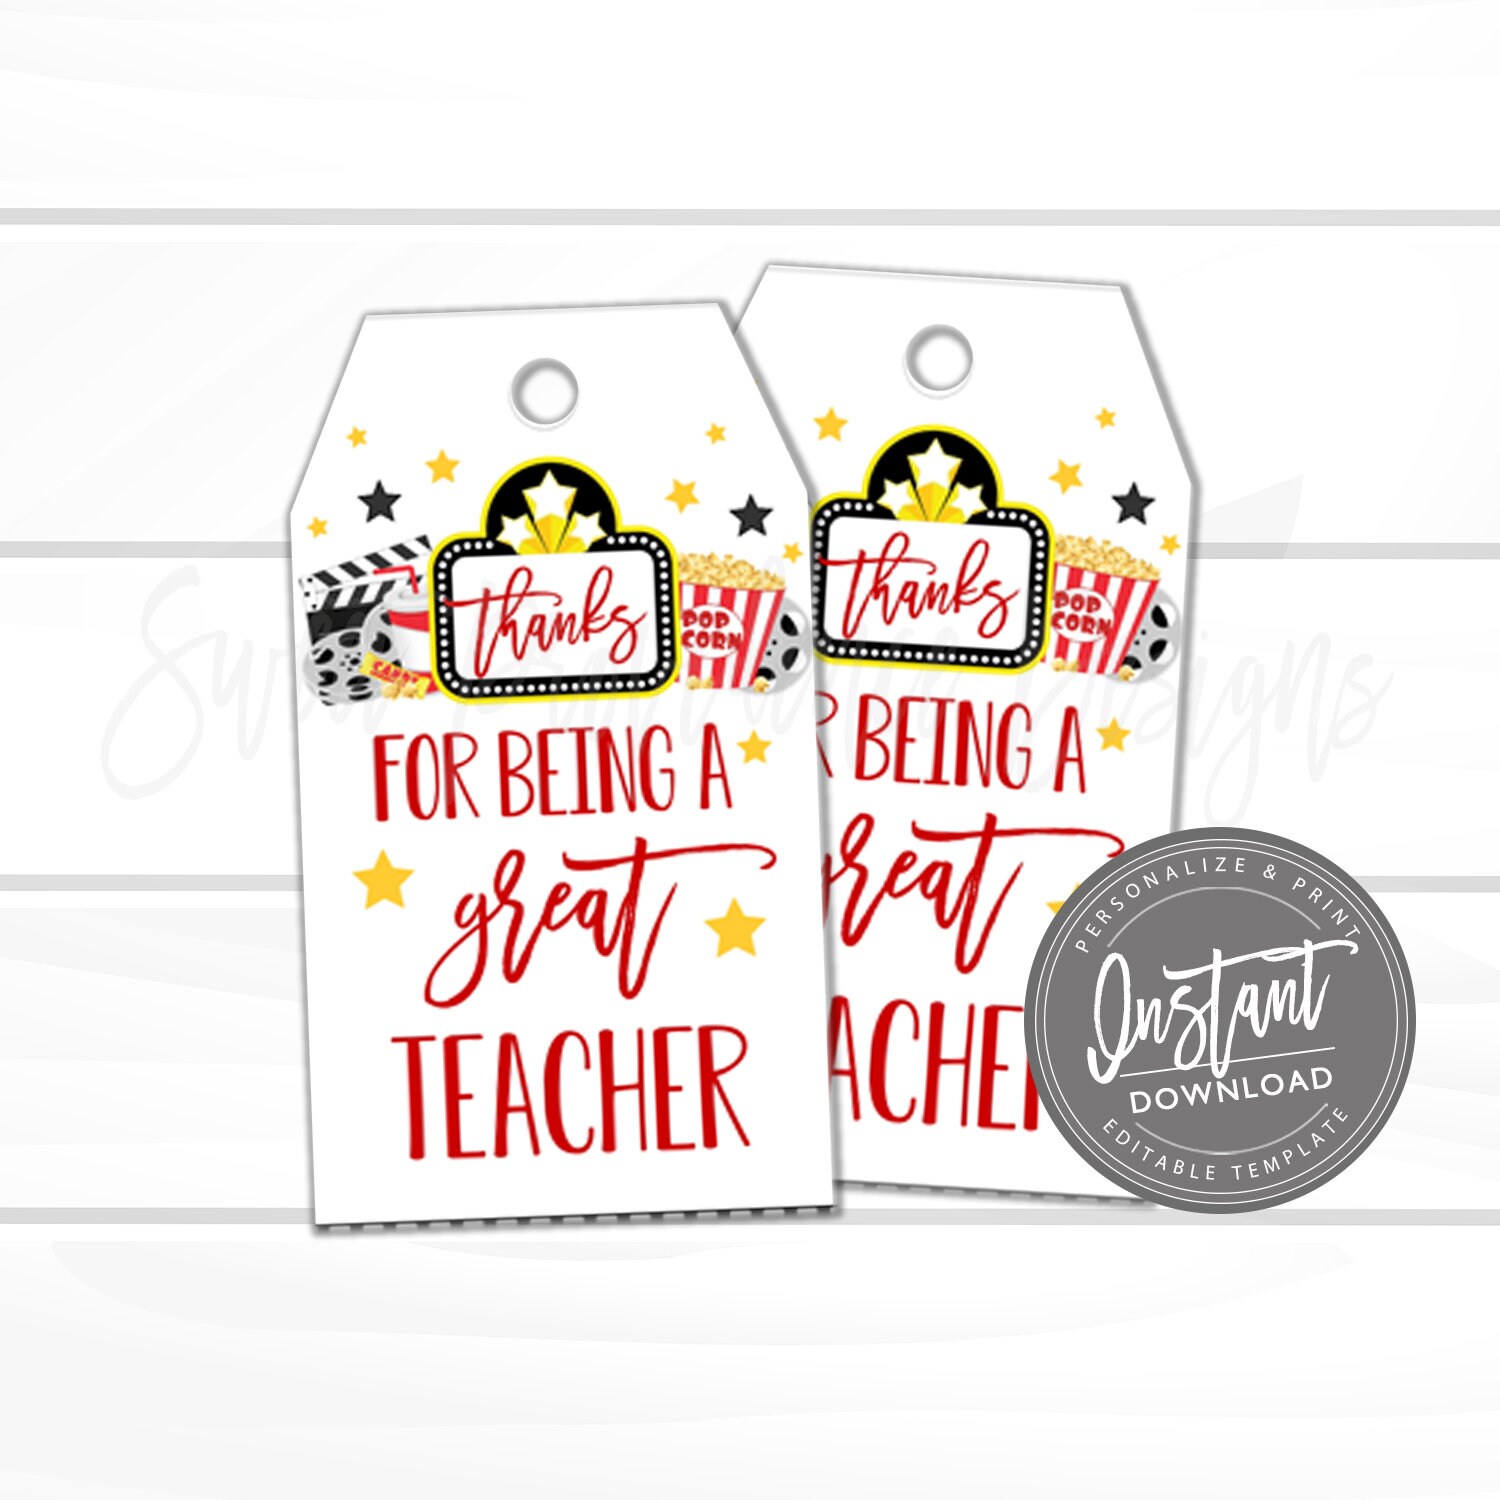 teacher appreciation gift tags